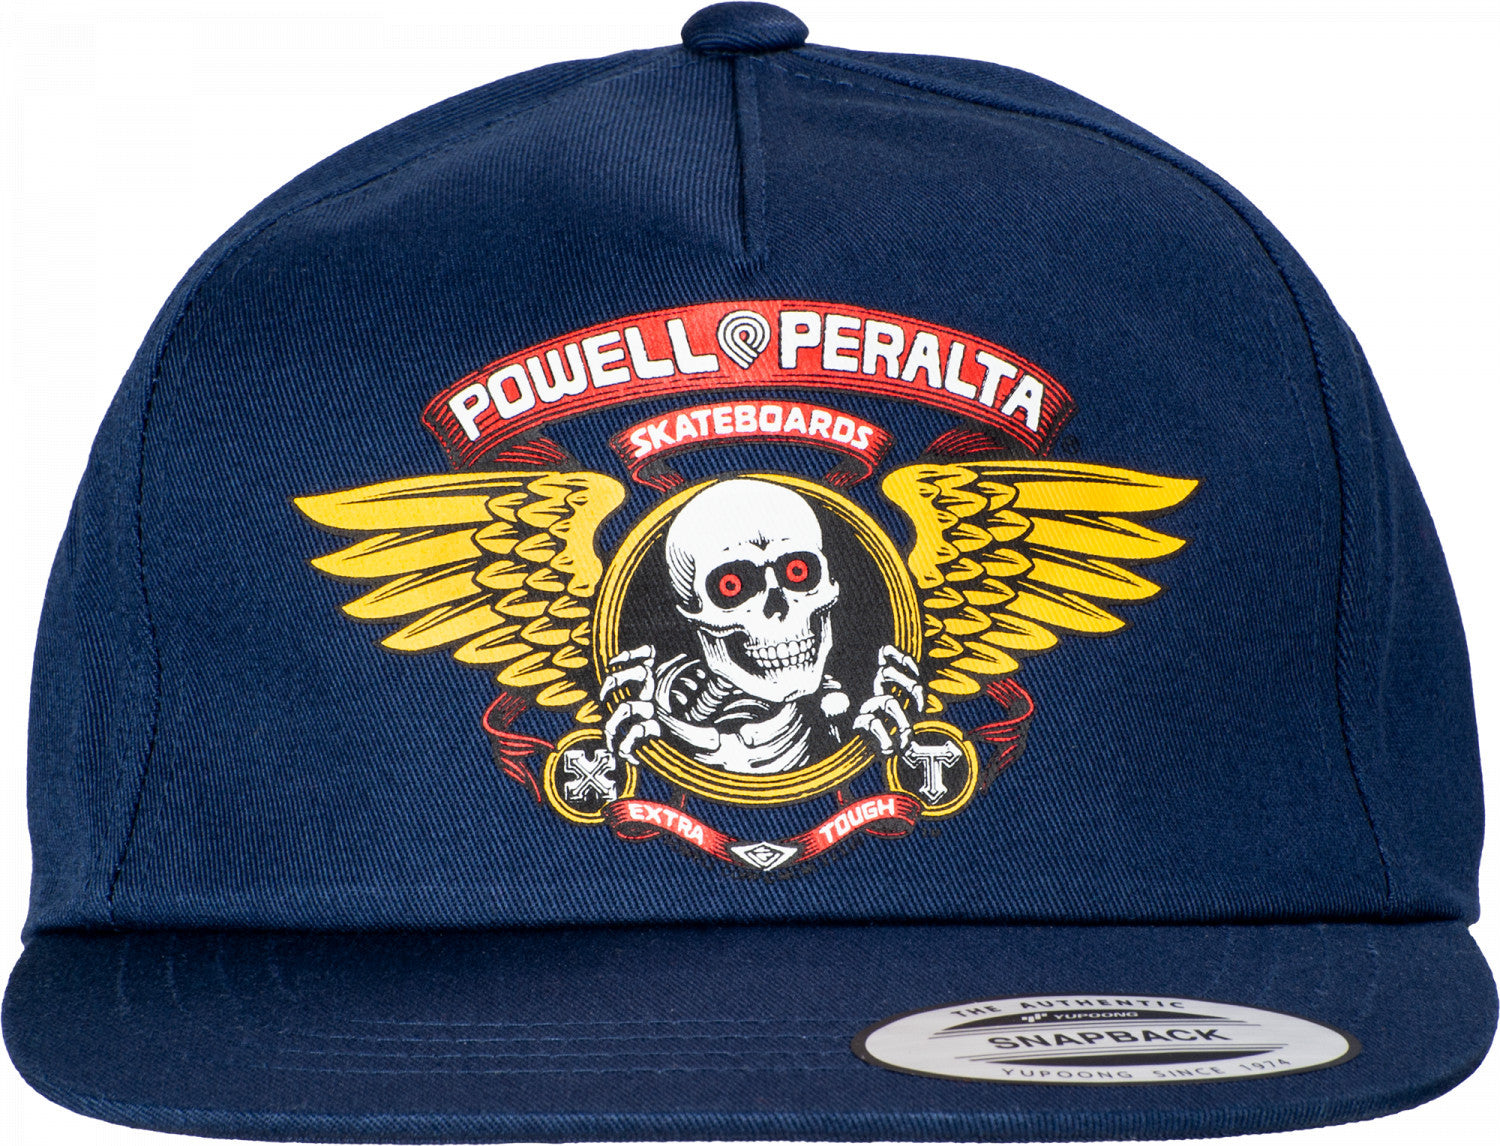 Powell Peralta Supreme Shopping Bag 12 X 16 (Navy)